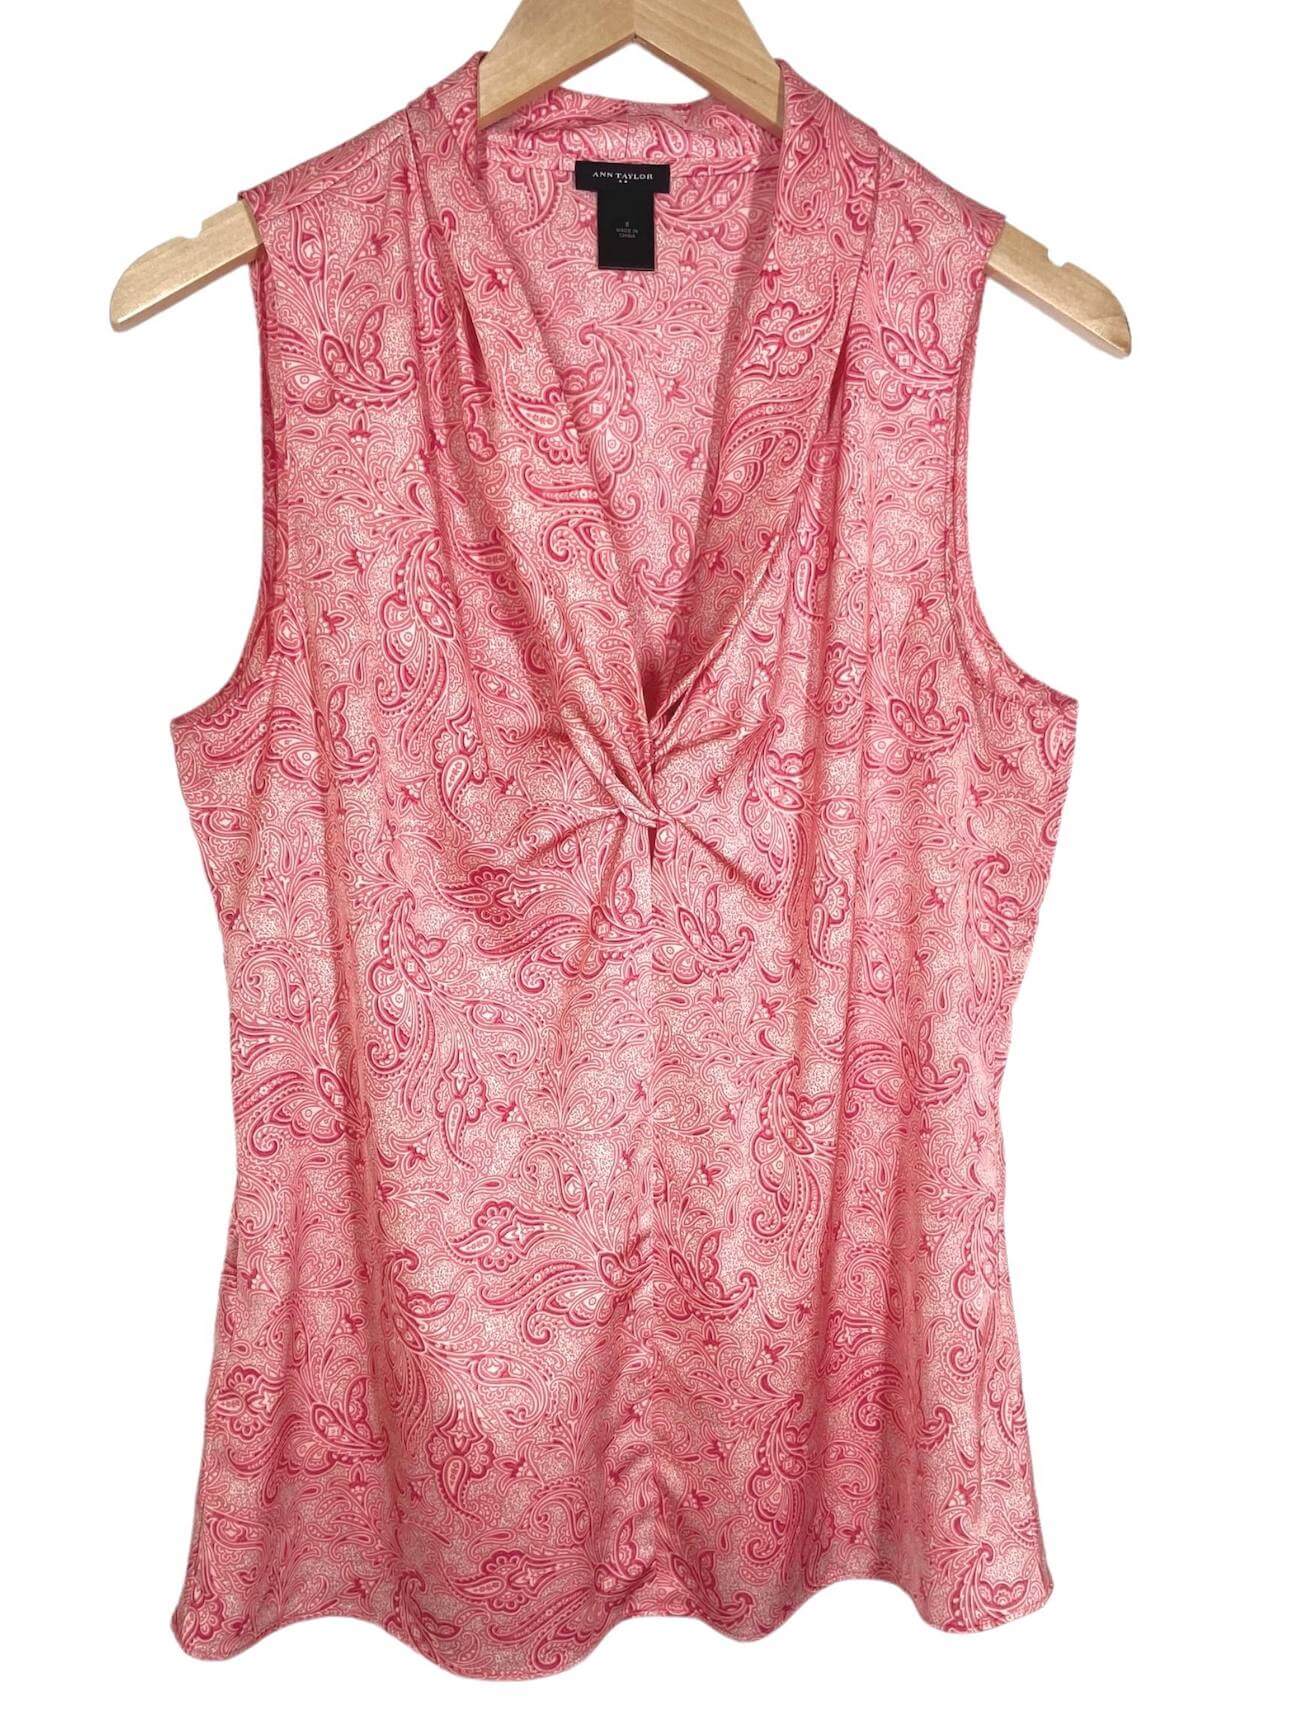 Light Spring ANN TAYLOR pink paisley print blouse